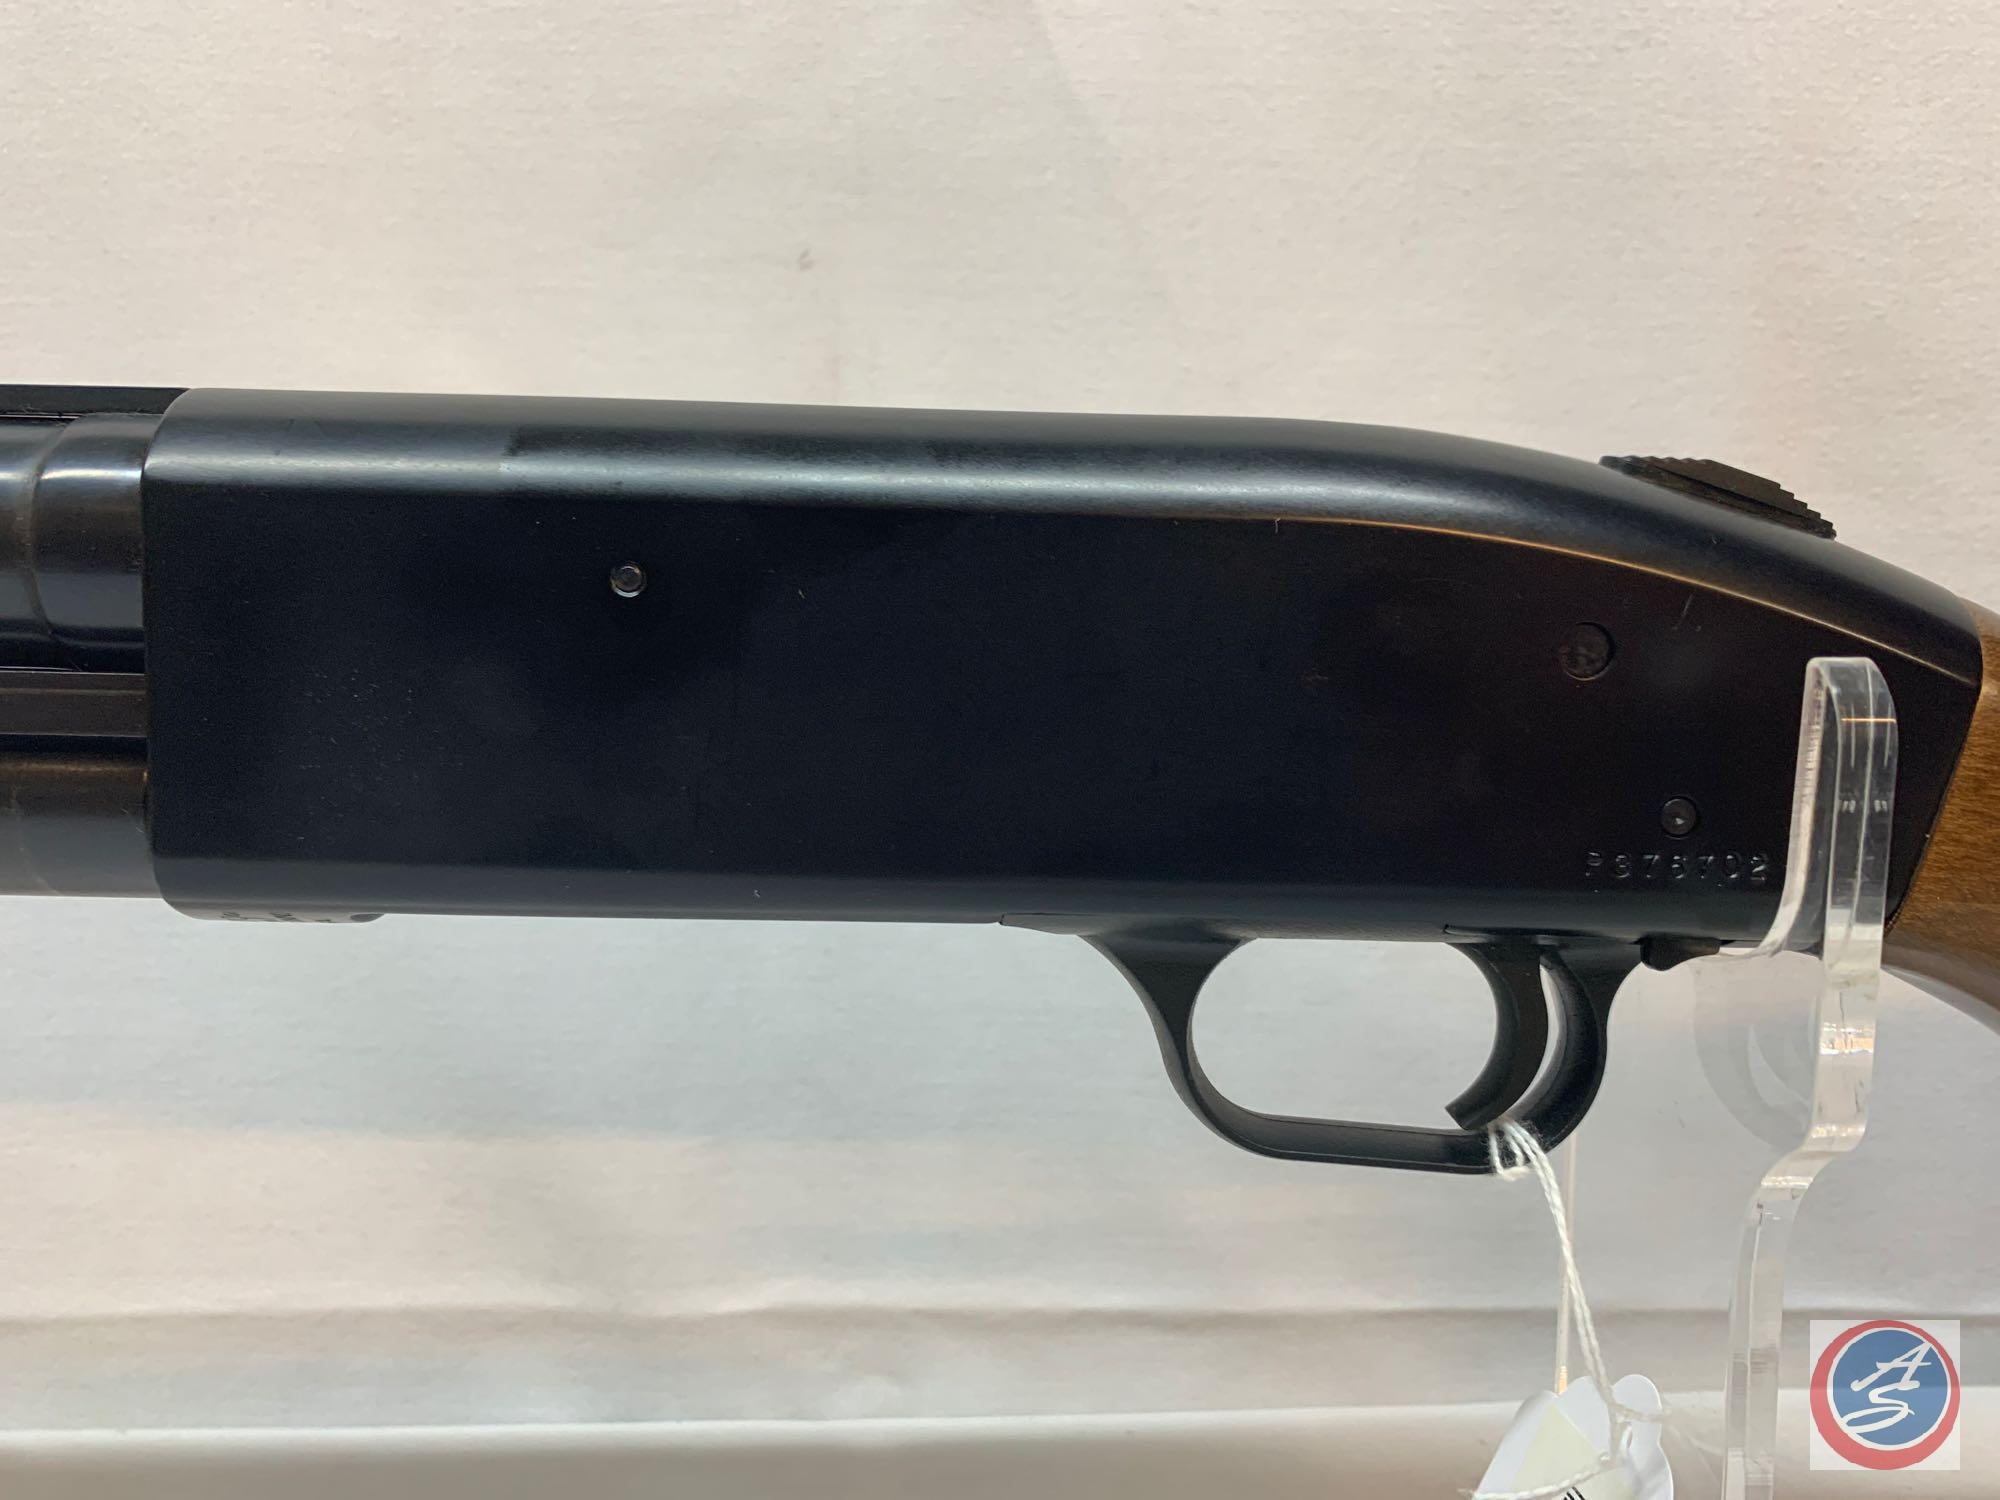 Mossberg Model 500 A 12 GA Shotgun Pump Action Shotgun with vent rib28 inc barrel in good condition